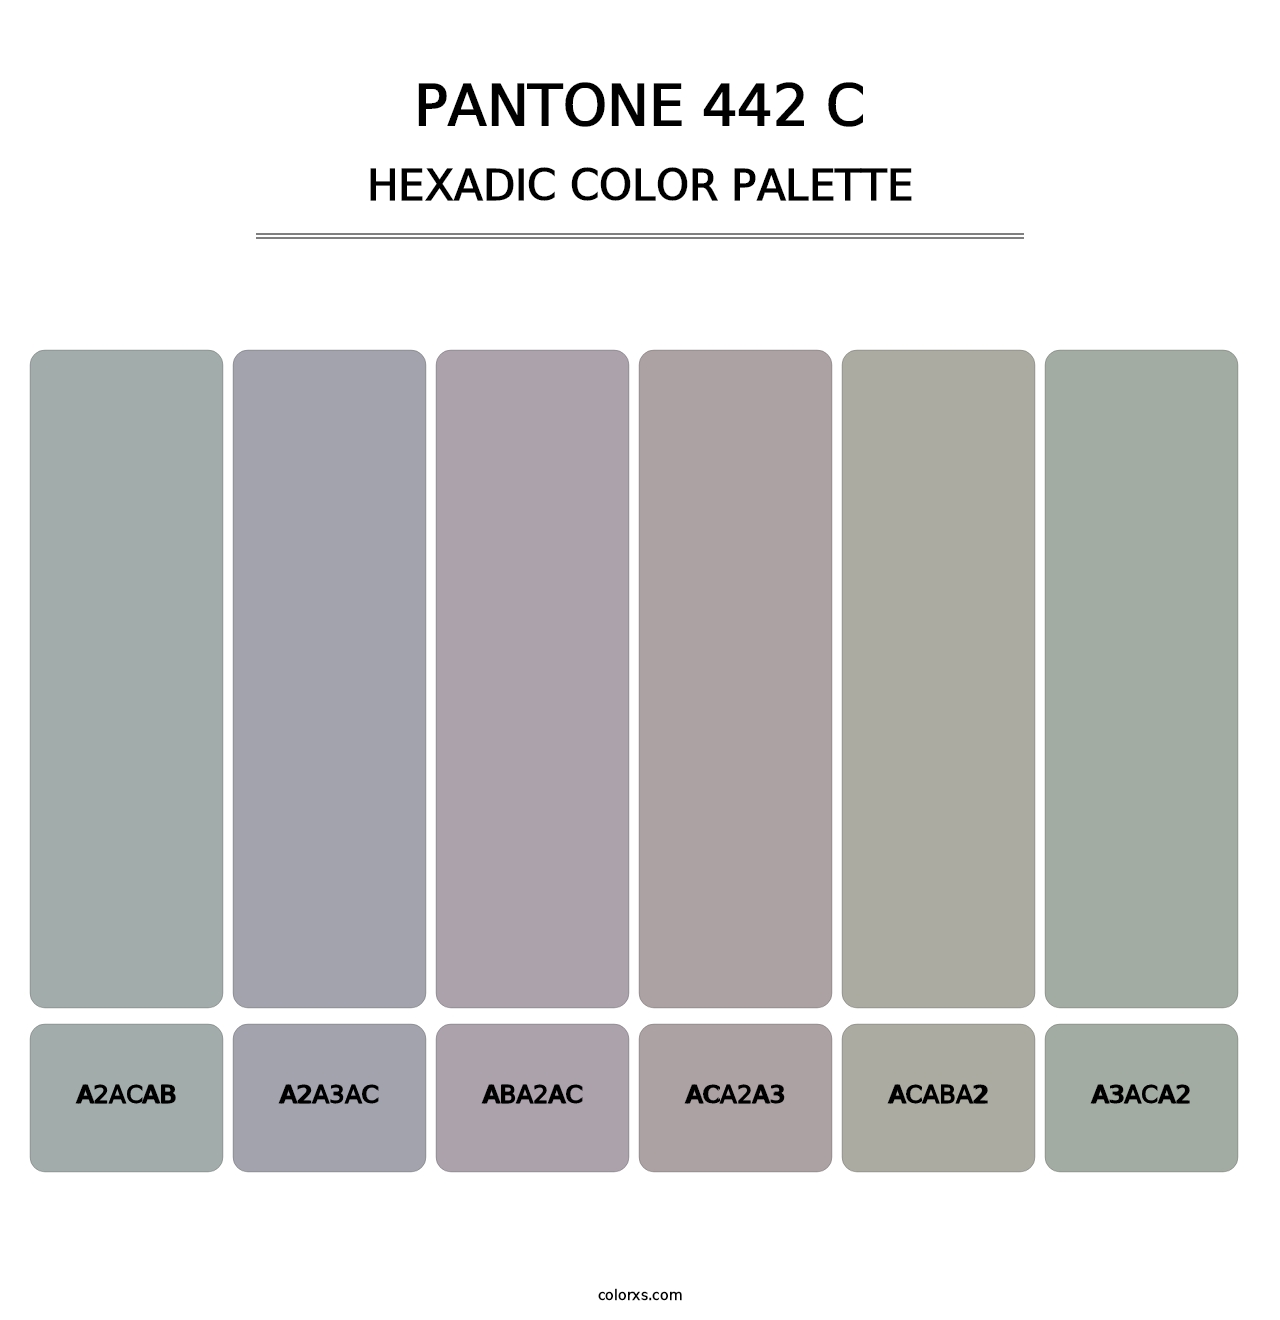 PANTONE 442 C - Hexadic Color Palette